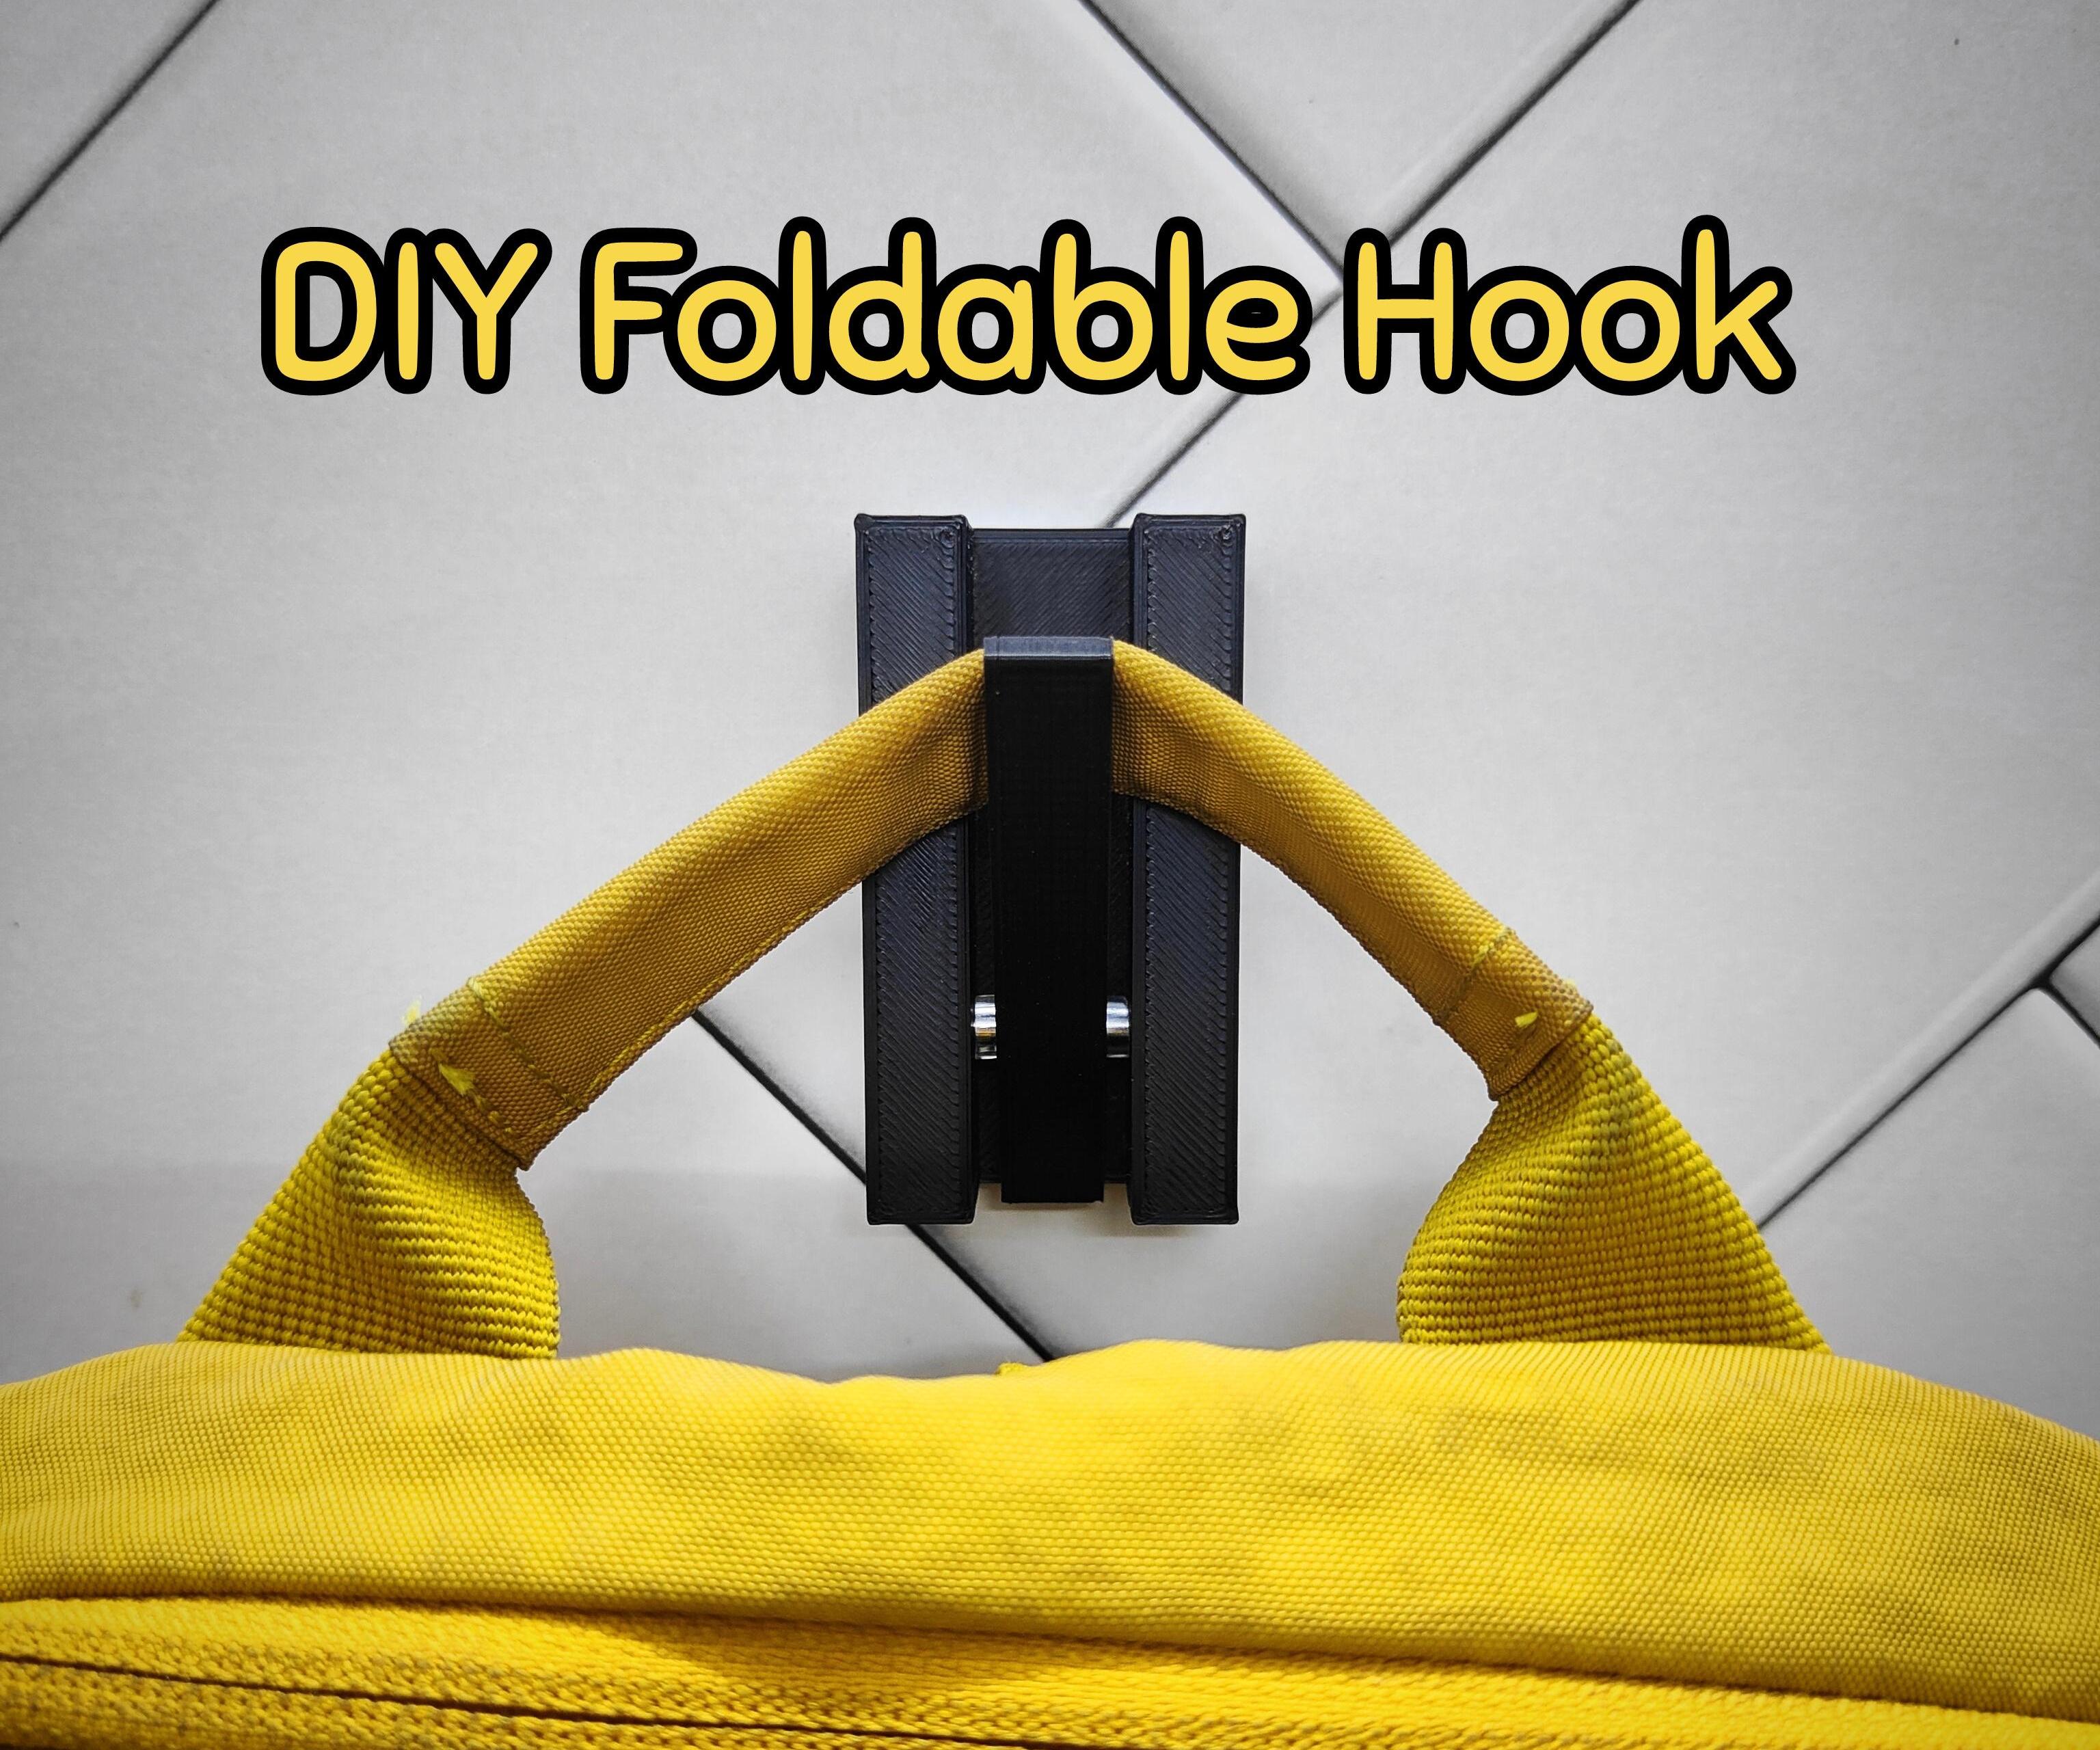 DIY Decorative Foldable Wall Hook